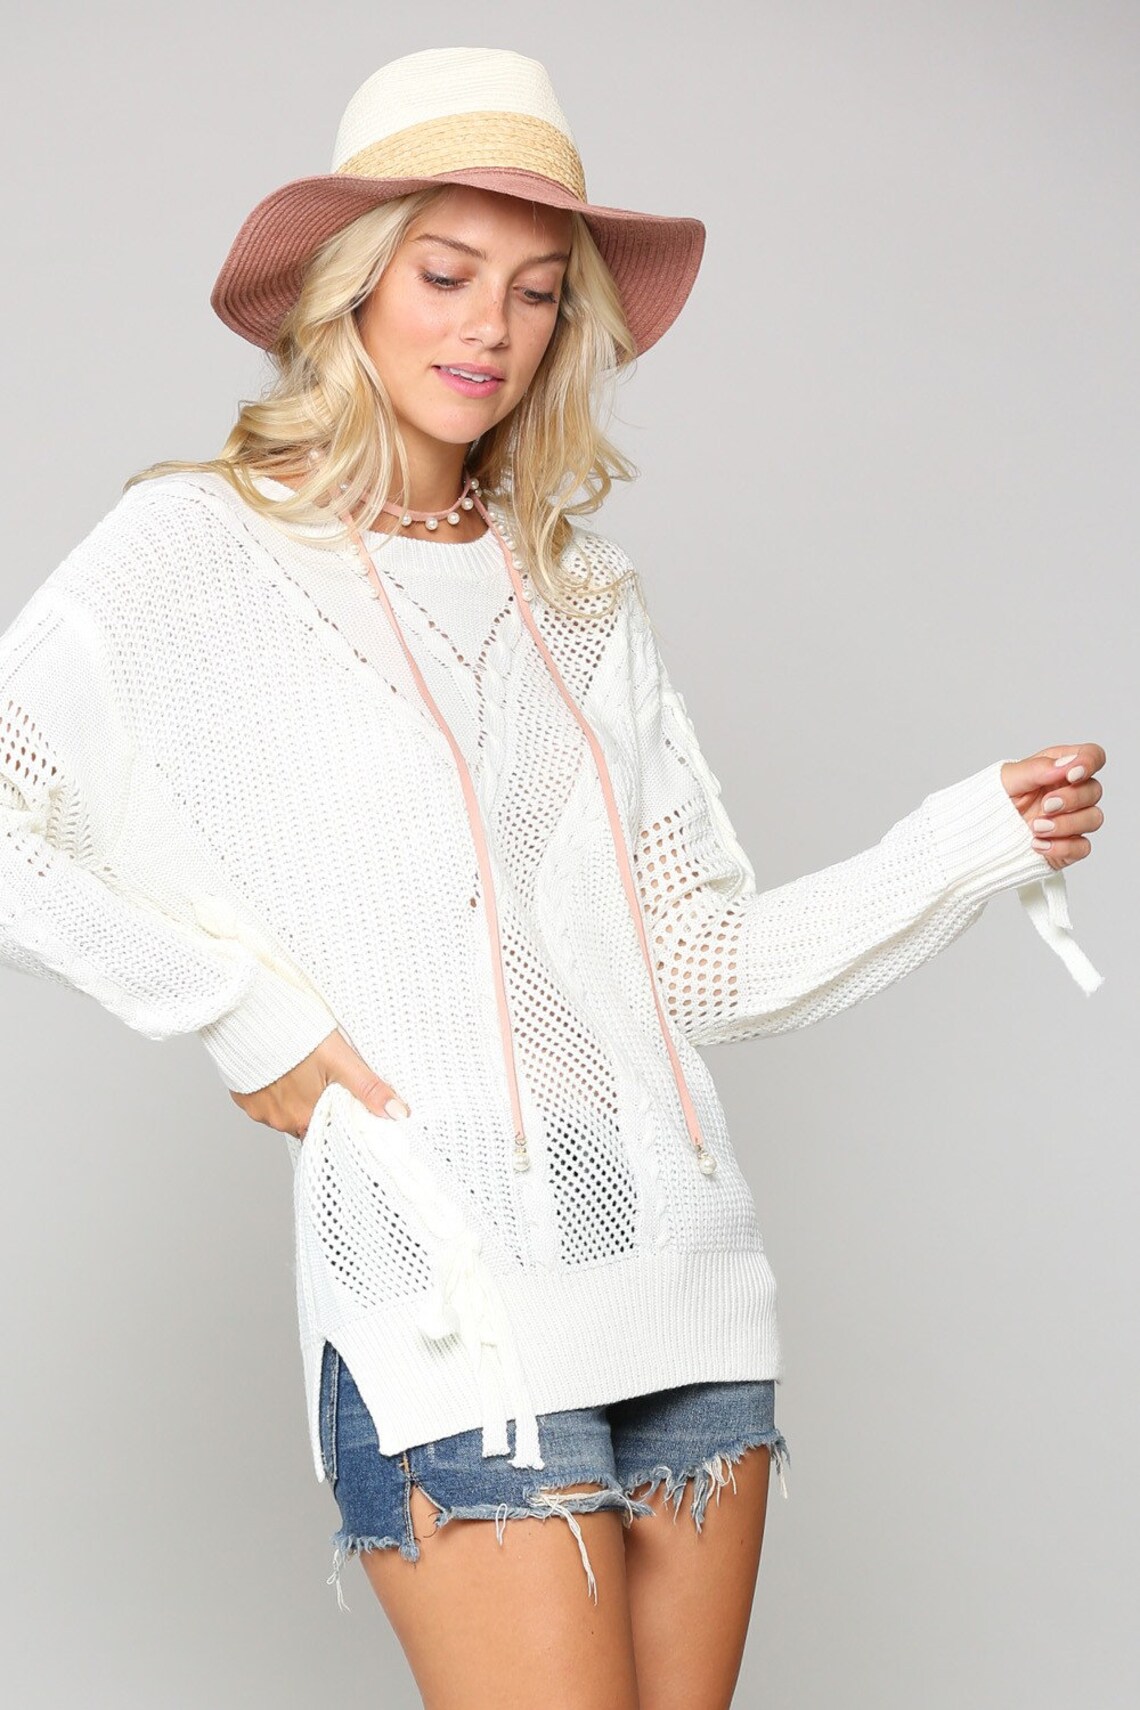 New KYEMI designer white boho western pointelle stich sweater | Etsy